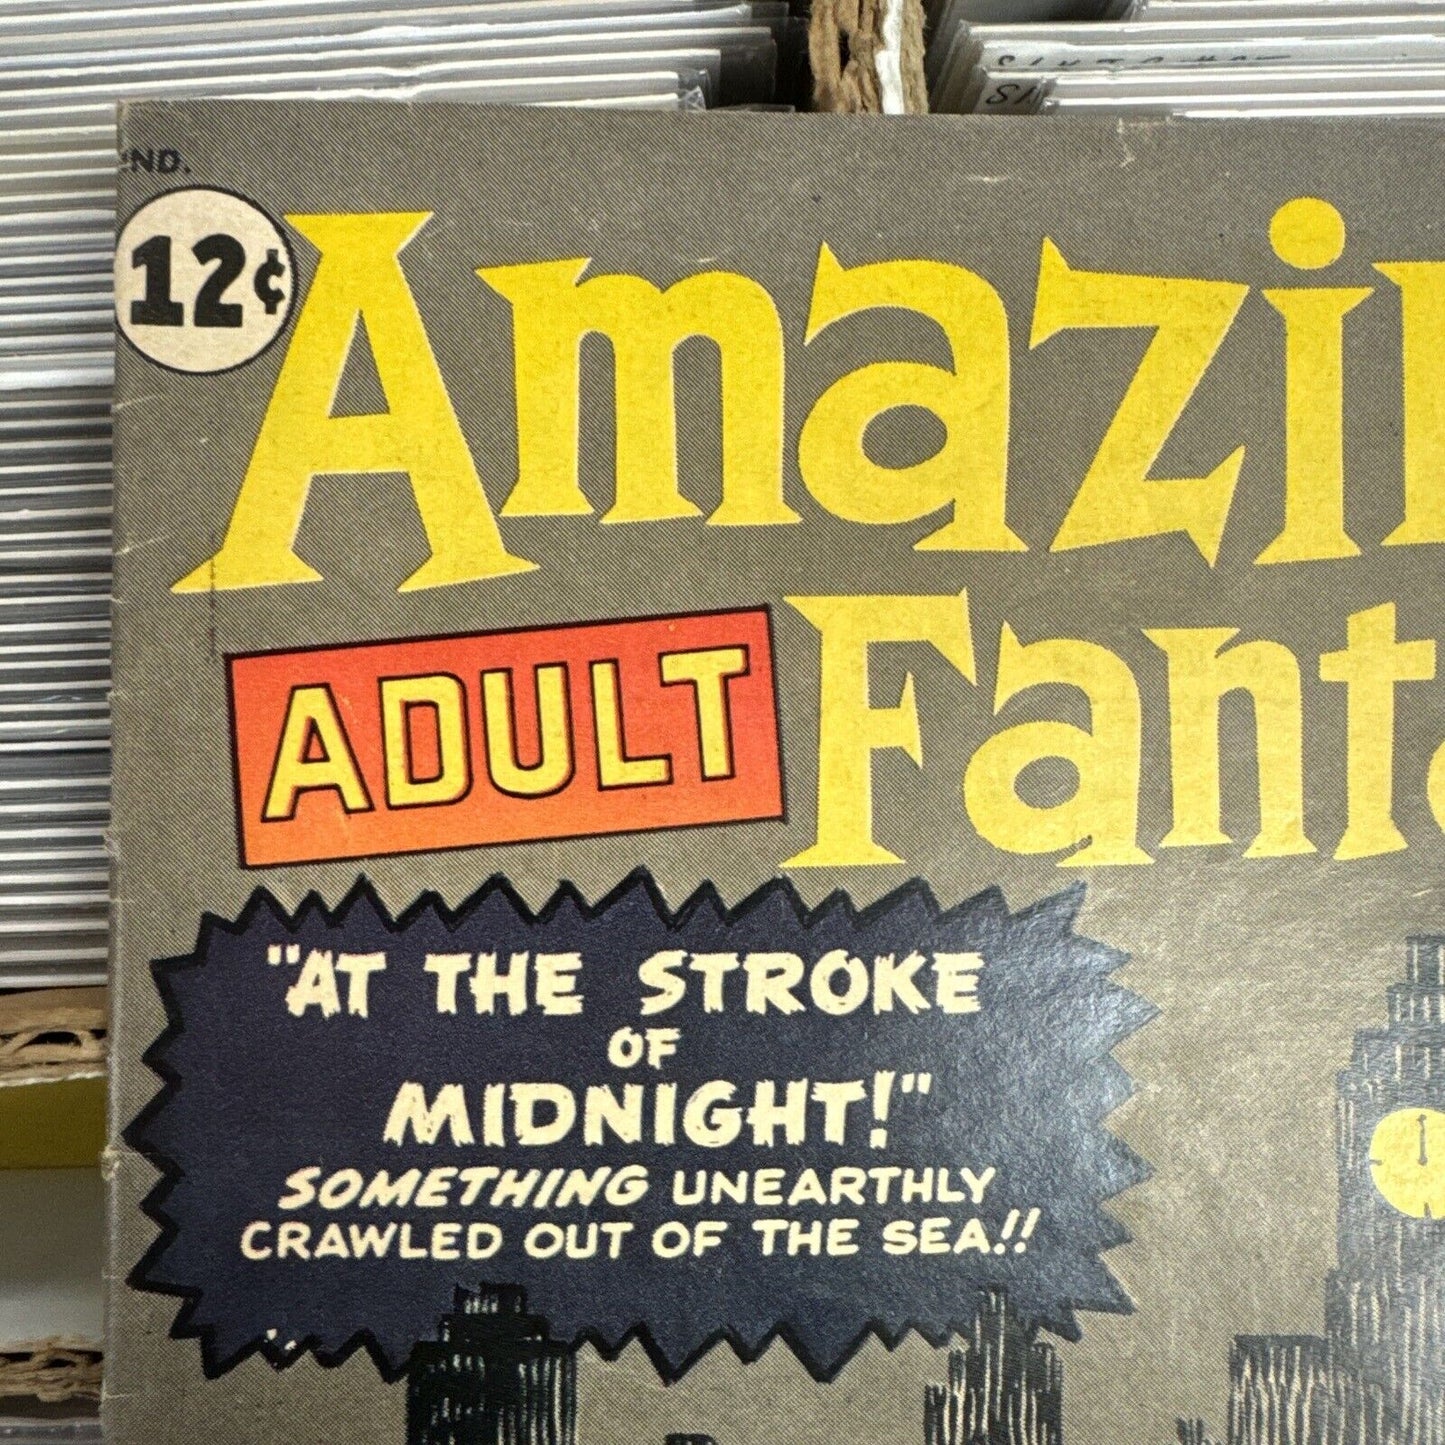 Atlas Comics Amazing Fantasy 13 Classic Stan Lee & Steve Ditko 1962